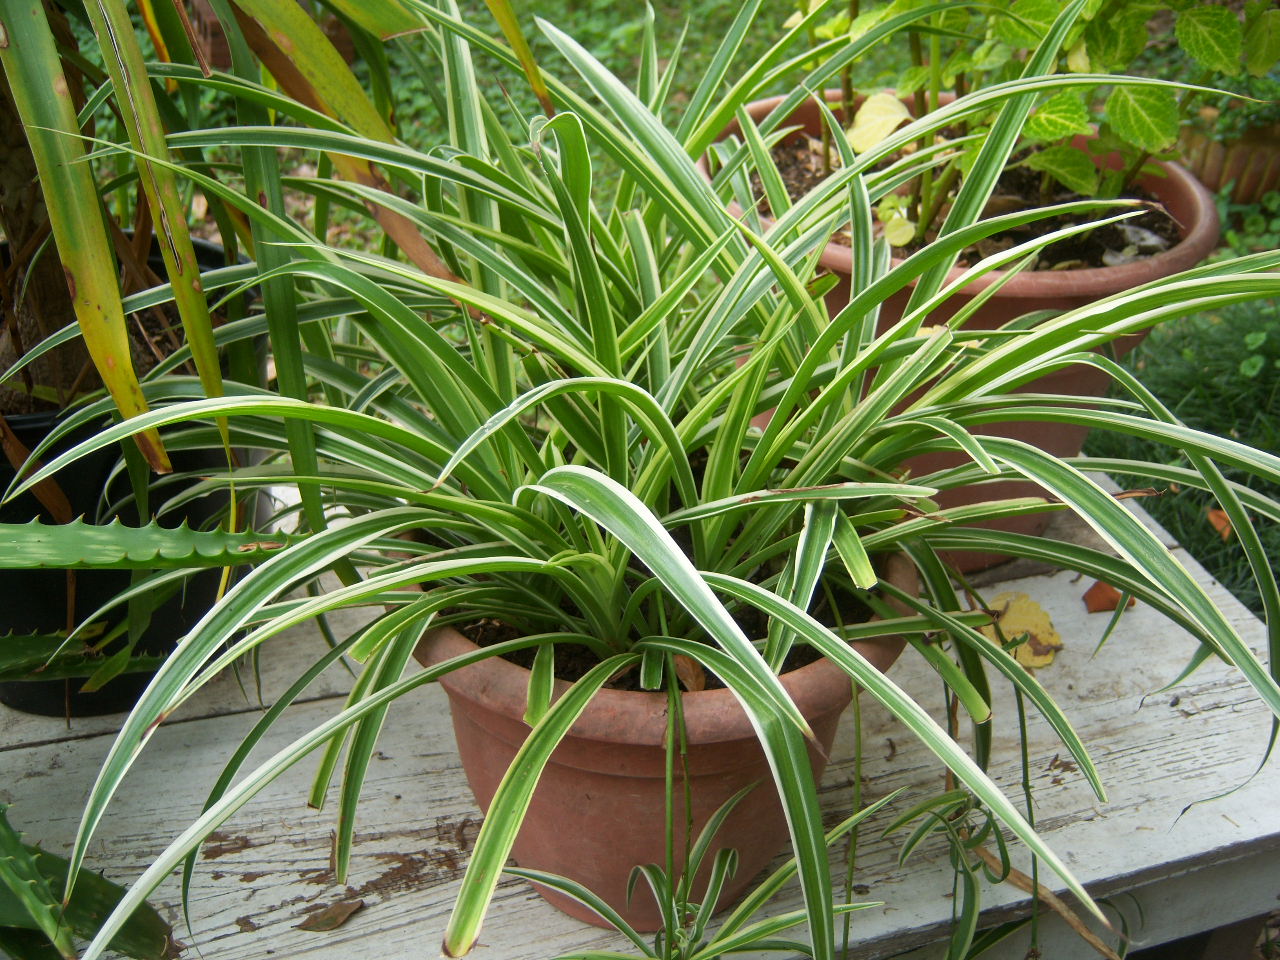 107-68-spider-plant-chlorophytum-comosum-from-walley-morse-7-3-12.jpg